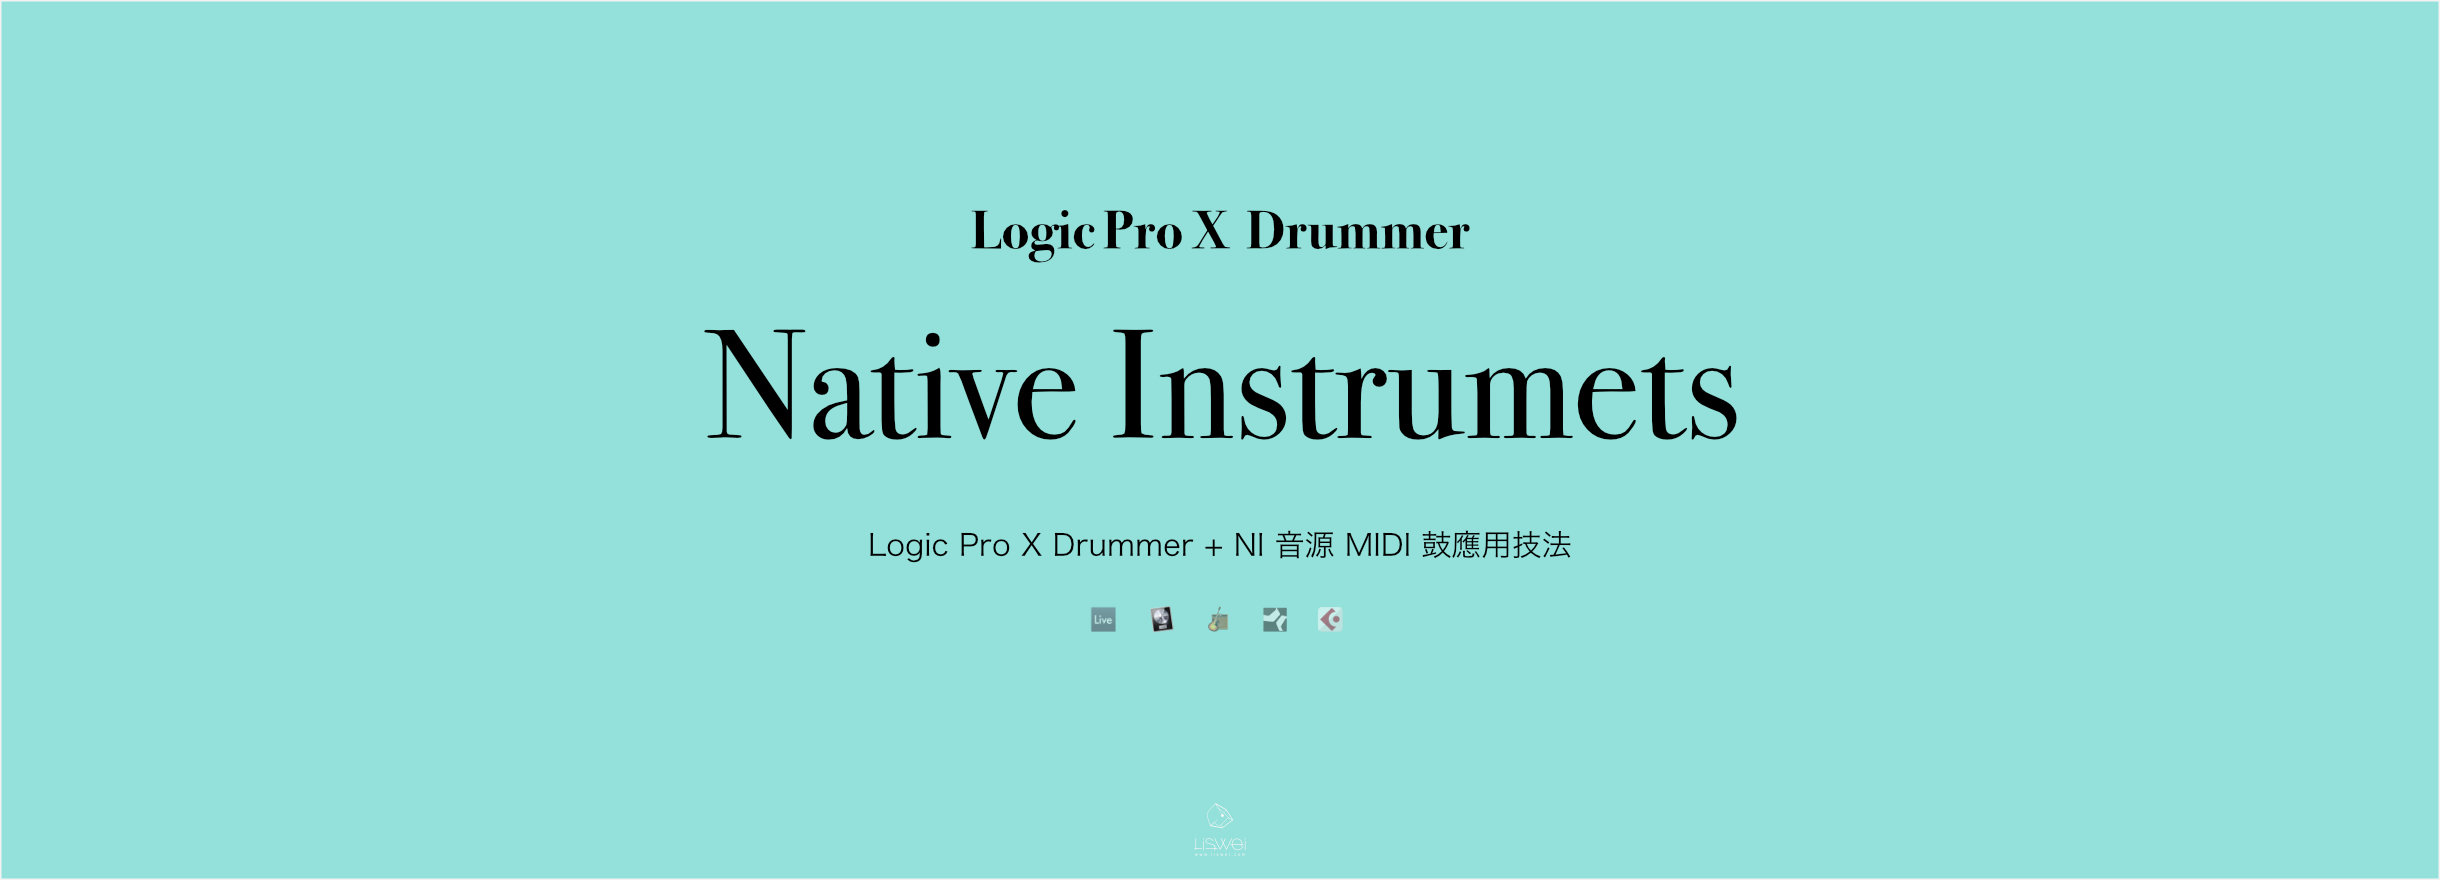 Logic Pro X Drummer + NI 音源 MIDI 鼓應用技法